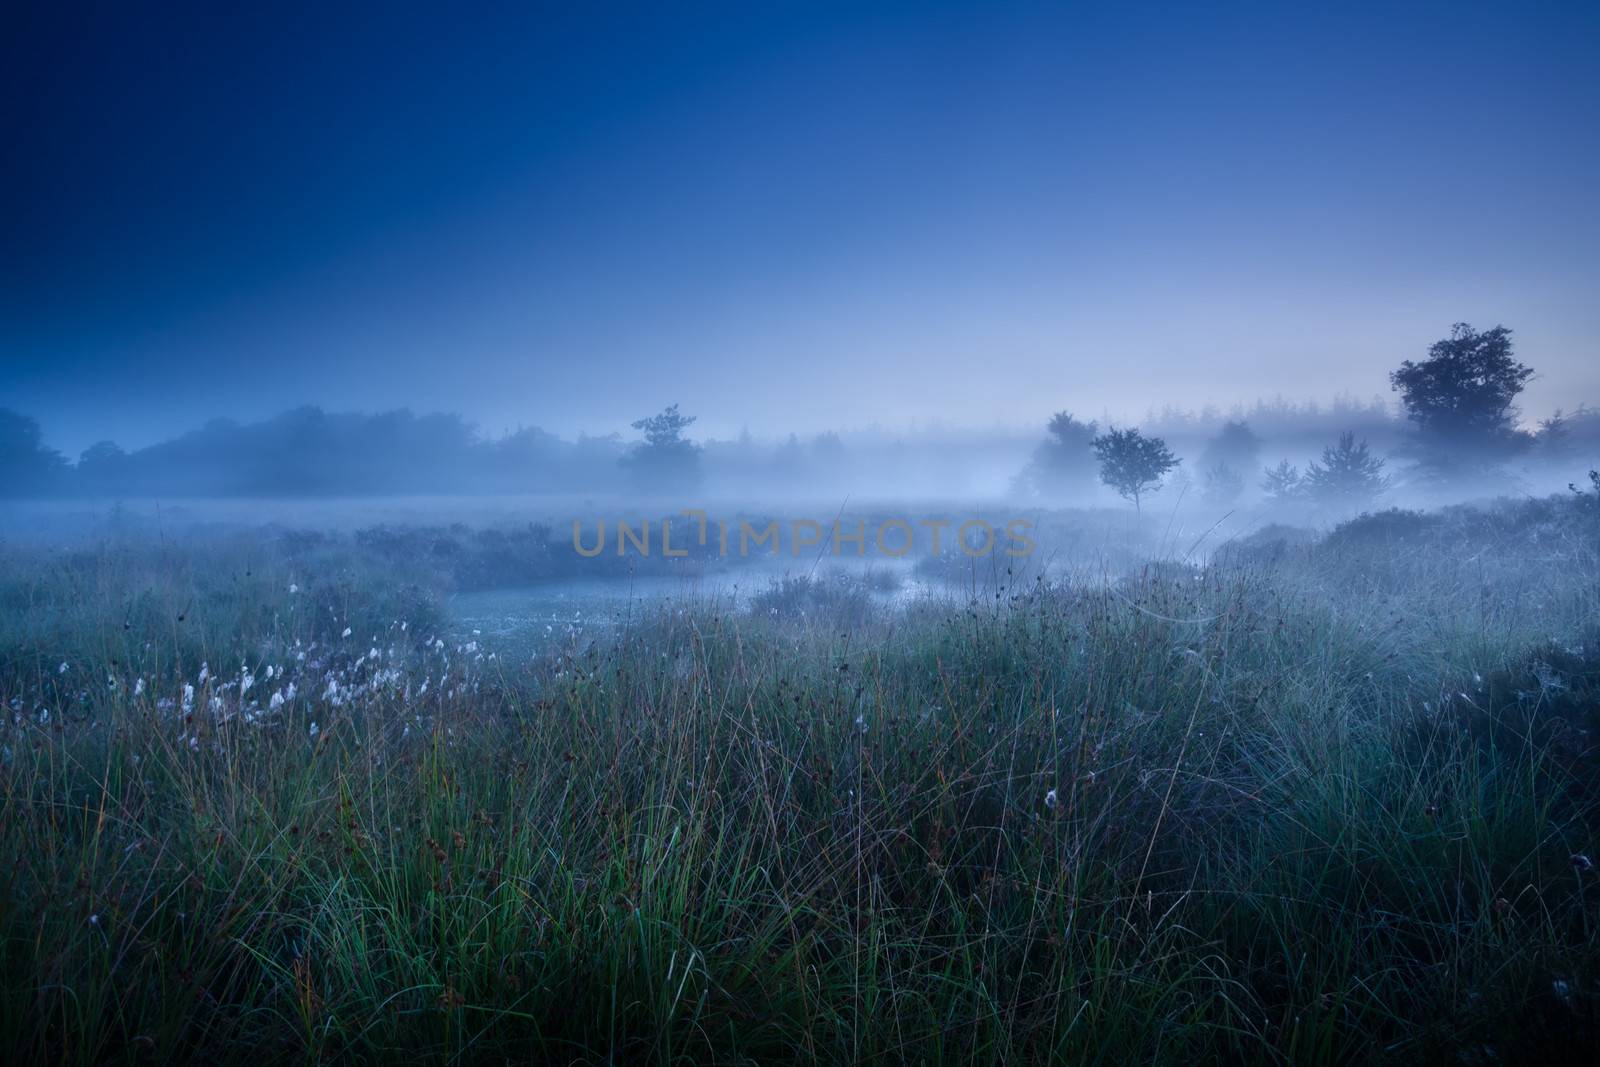 misty morning dusk over swamp with cotton-grass, Fochteloerveen, Netherlands